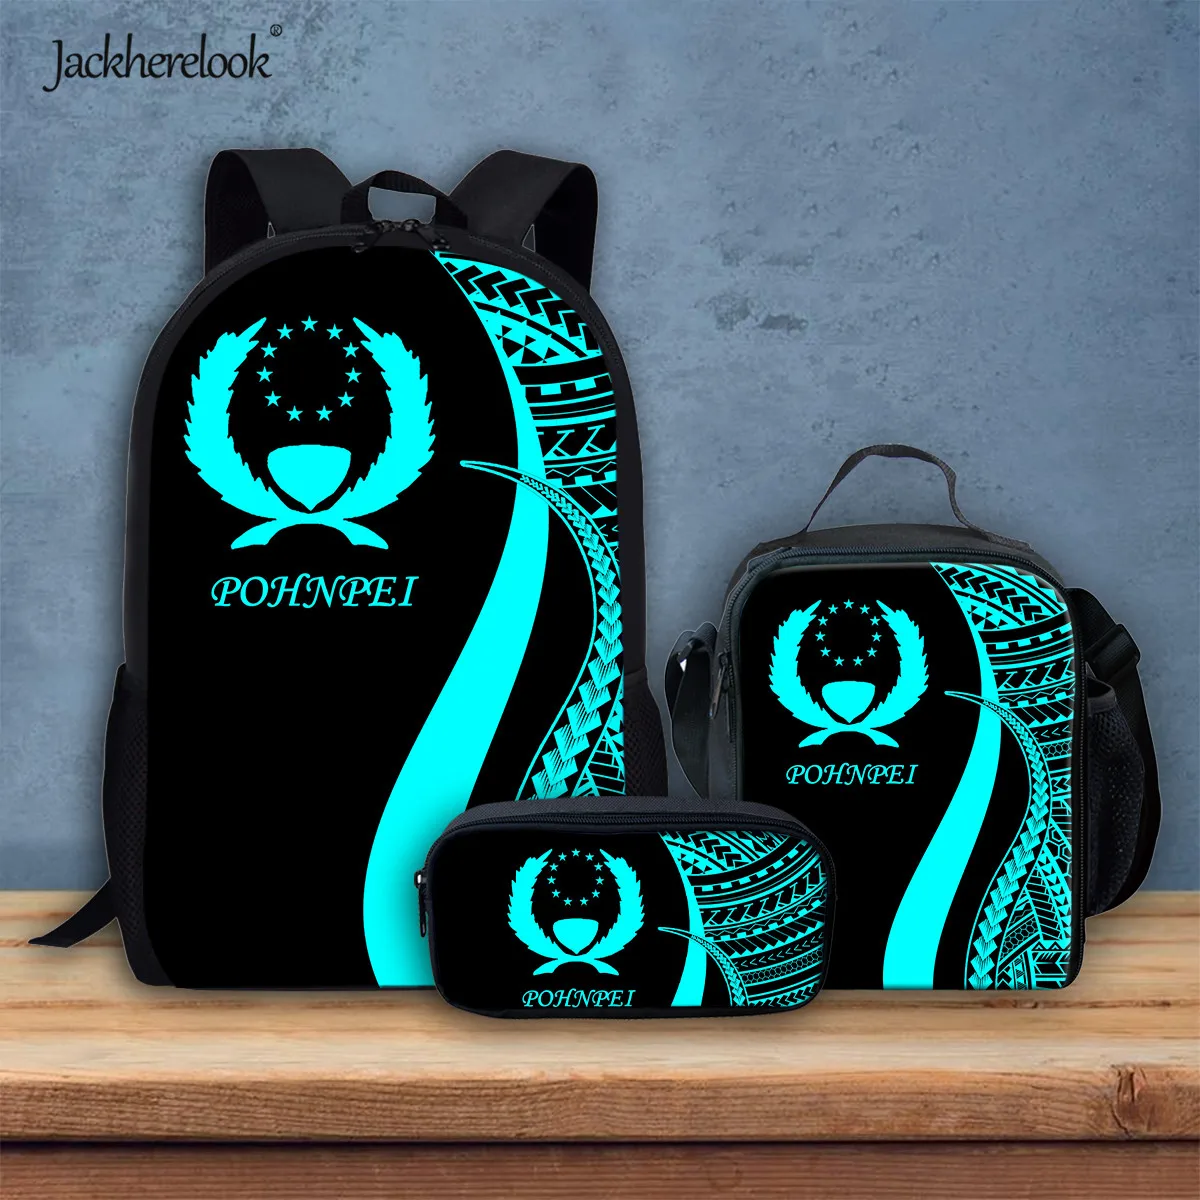 

Jackherelook Pohnpei Polynesian Design Schoolbag Girl Backpack Men Fashion School Bags 3pcs/Set Student Bookbag Large Satchel